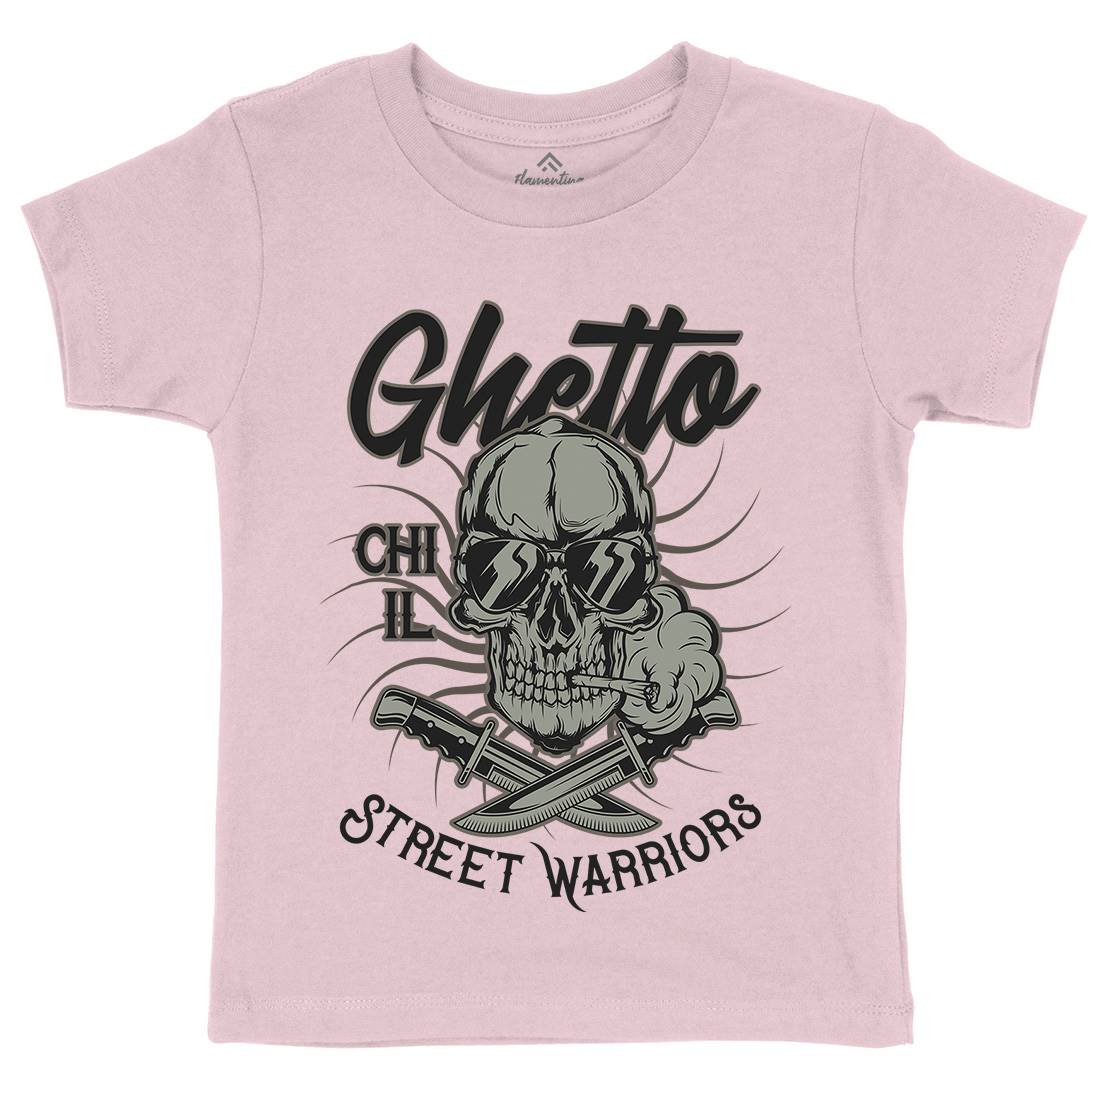 Ghetto Street Warriors Kids Crew Neck T-Shirt Retro D937